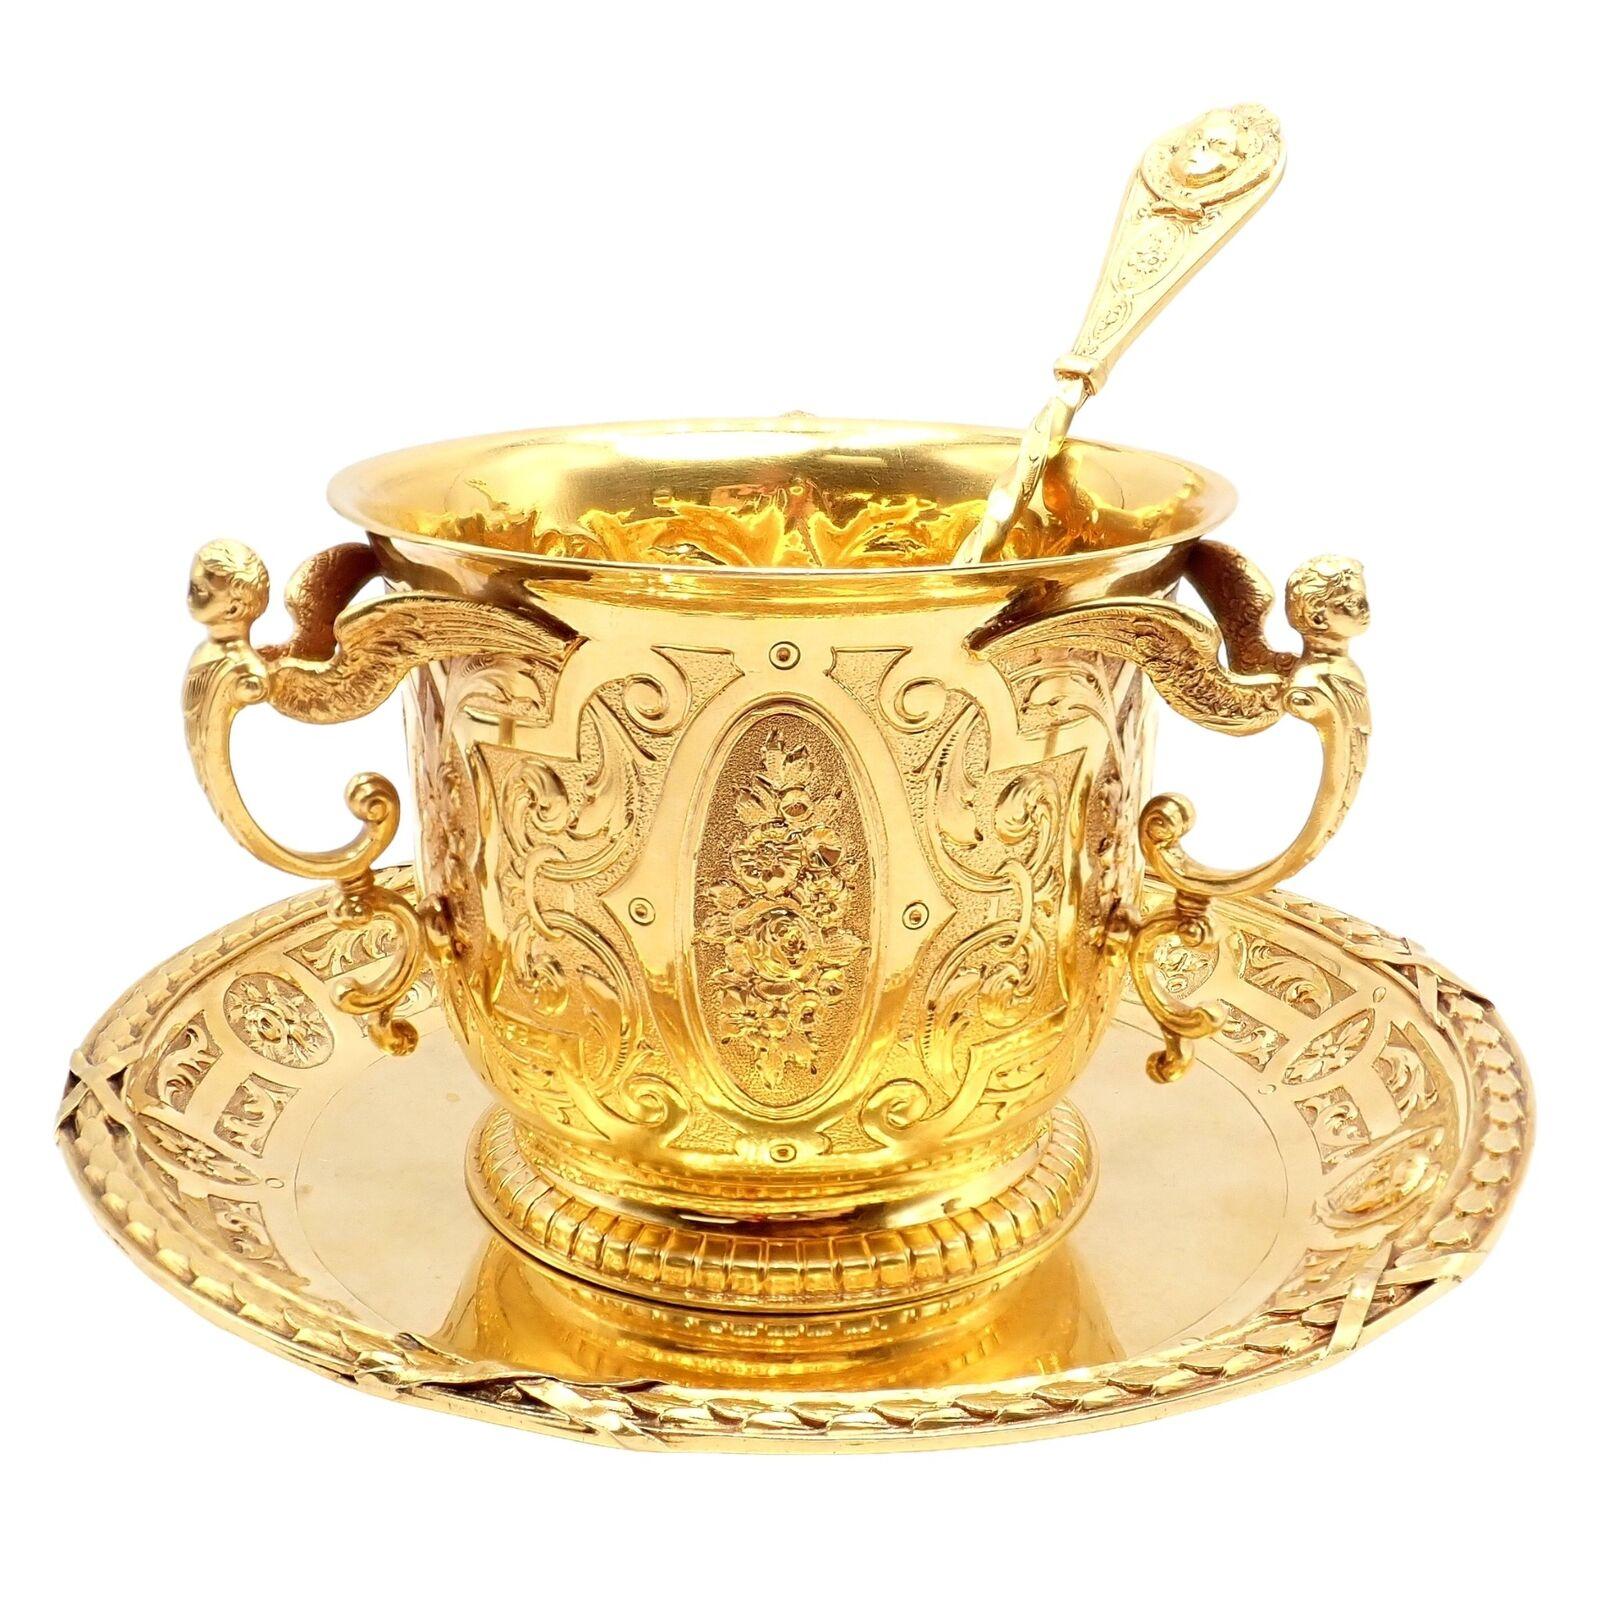 Antique Abraham Portal Sugar Bowl Dish Spoon Set Solid Yellow Gold circa 1779 For Sale 4